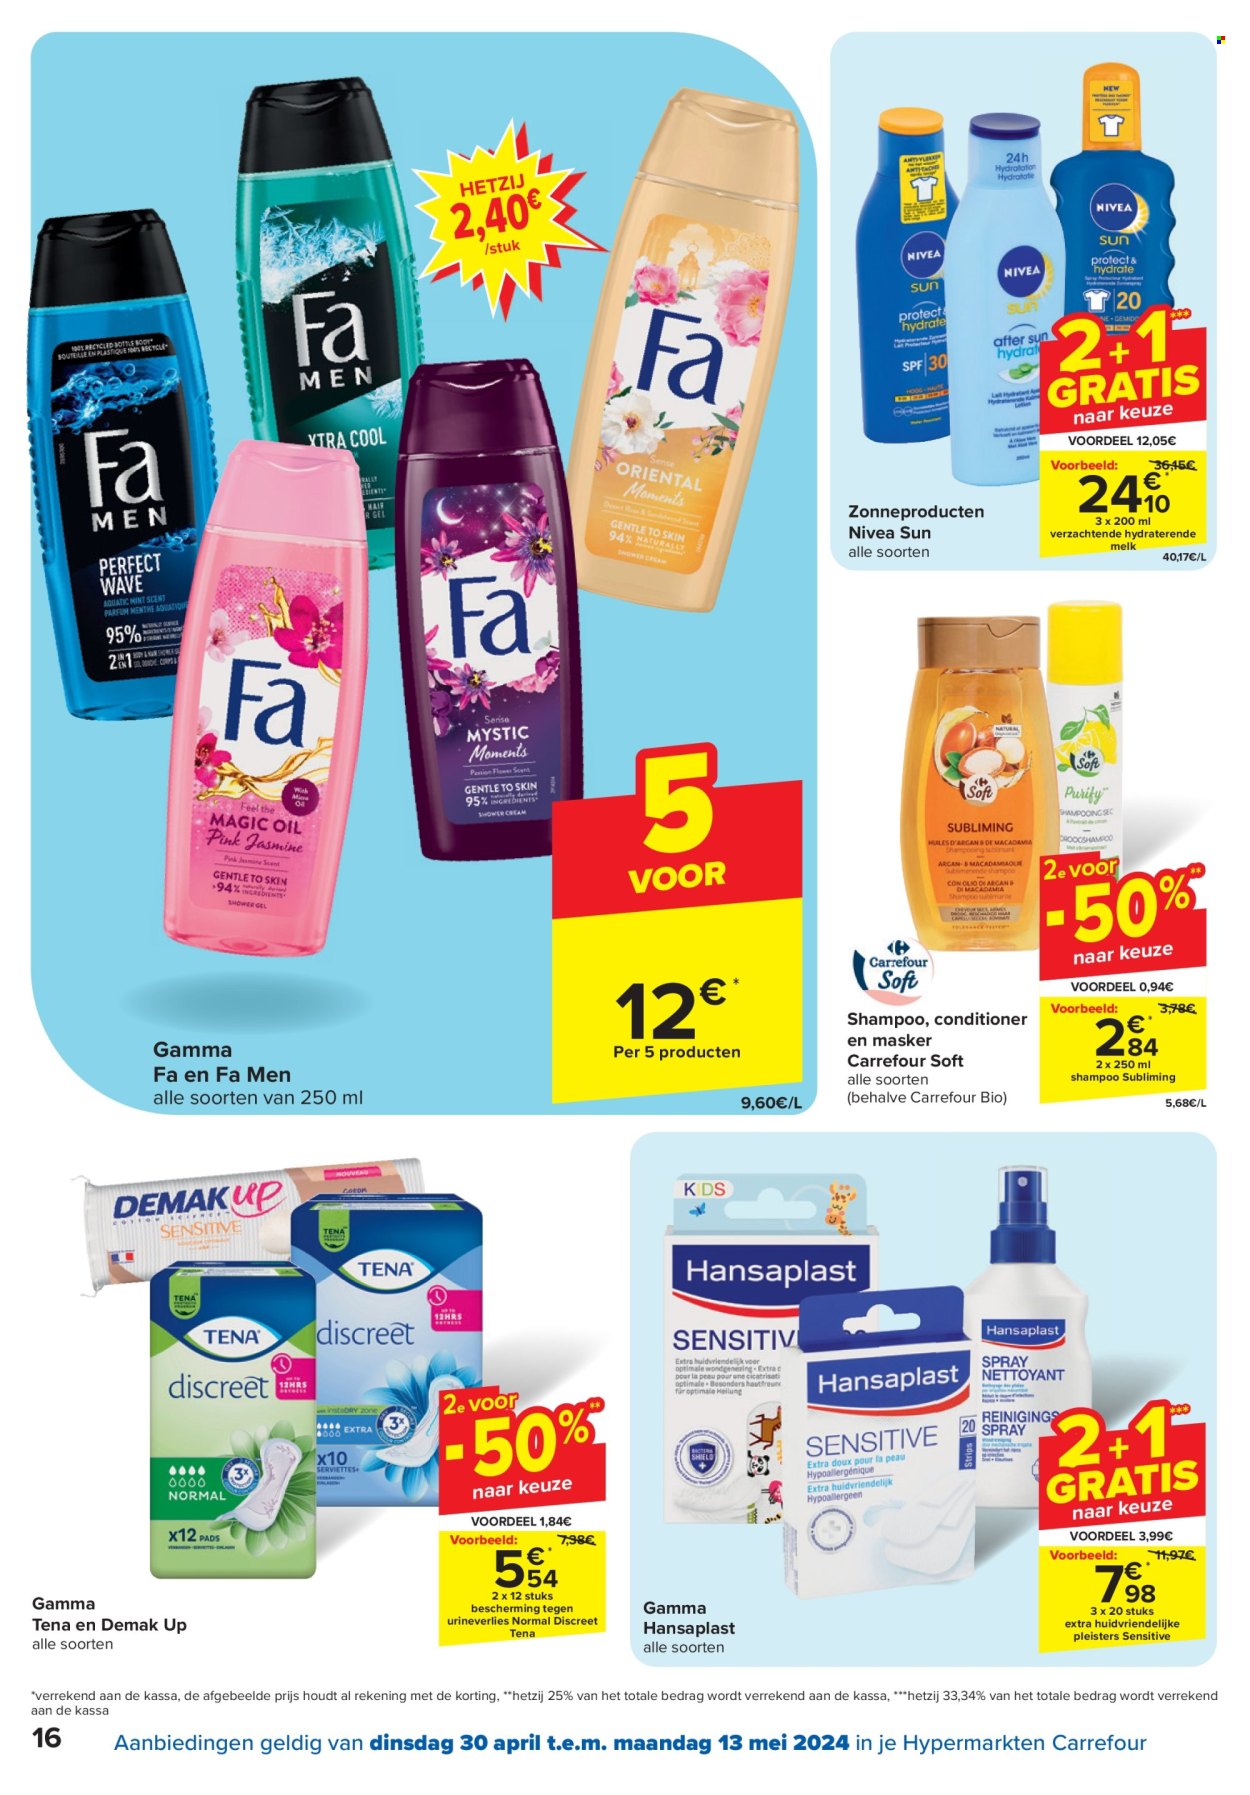 thumbnail - Catalogue Carrefour hypermarkt - 30/04/2024 - 13/05/2024 - Produits soldés - Nivea, Fa Men, shampooing, Discreet, Tena. Page 16.